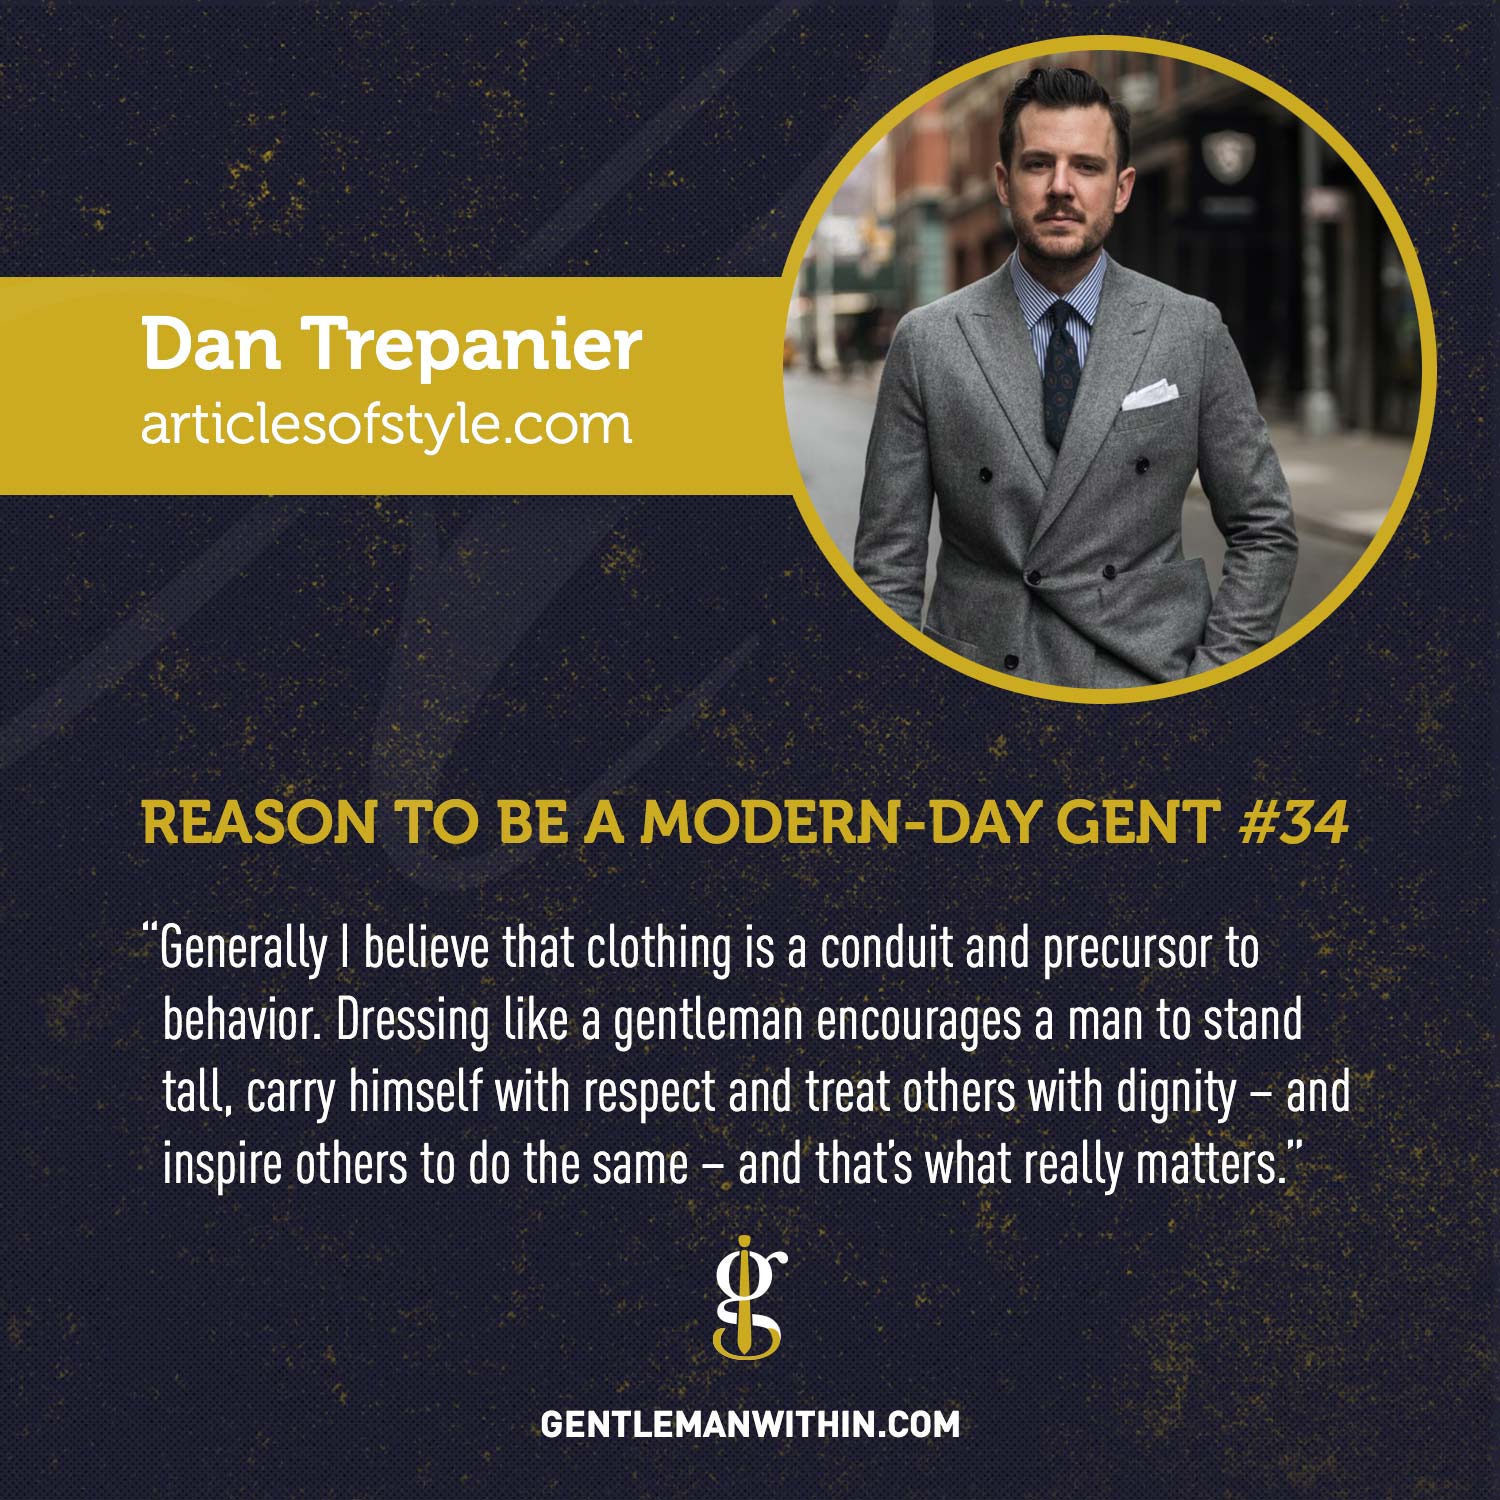 Dan Trepanier Reason To Be A Modern-Day Gentleman